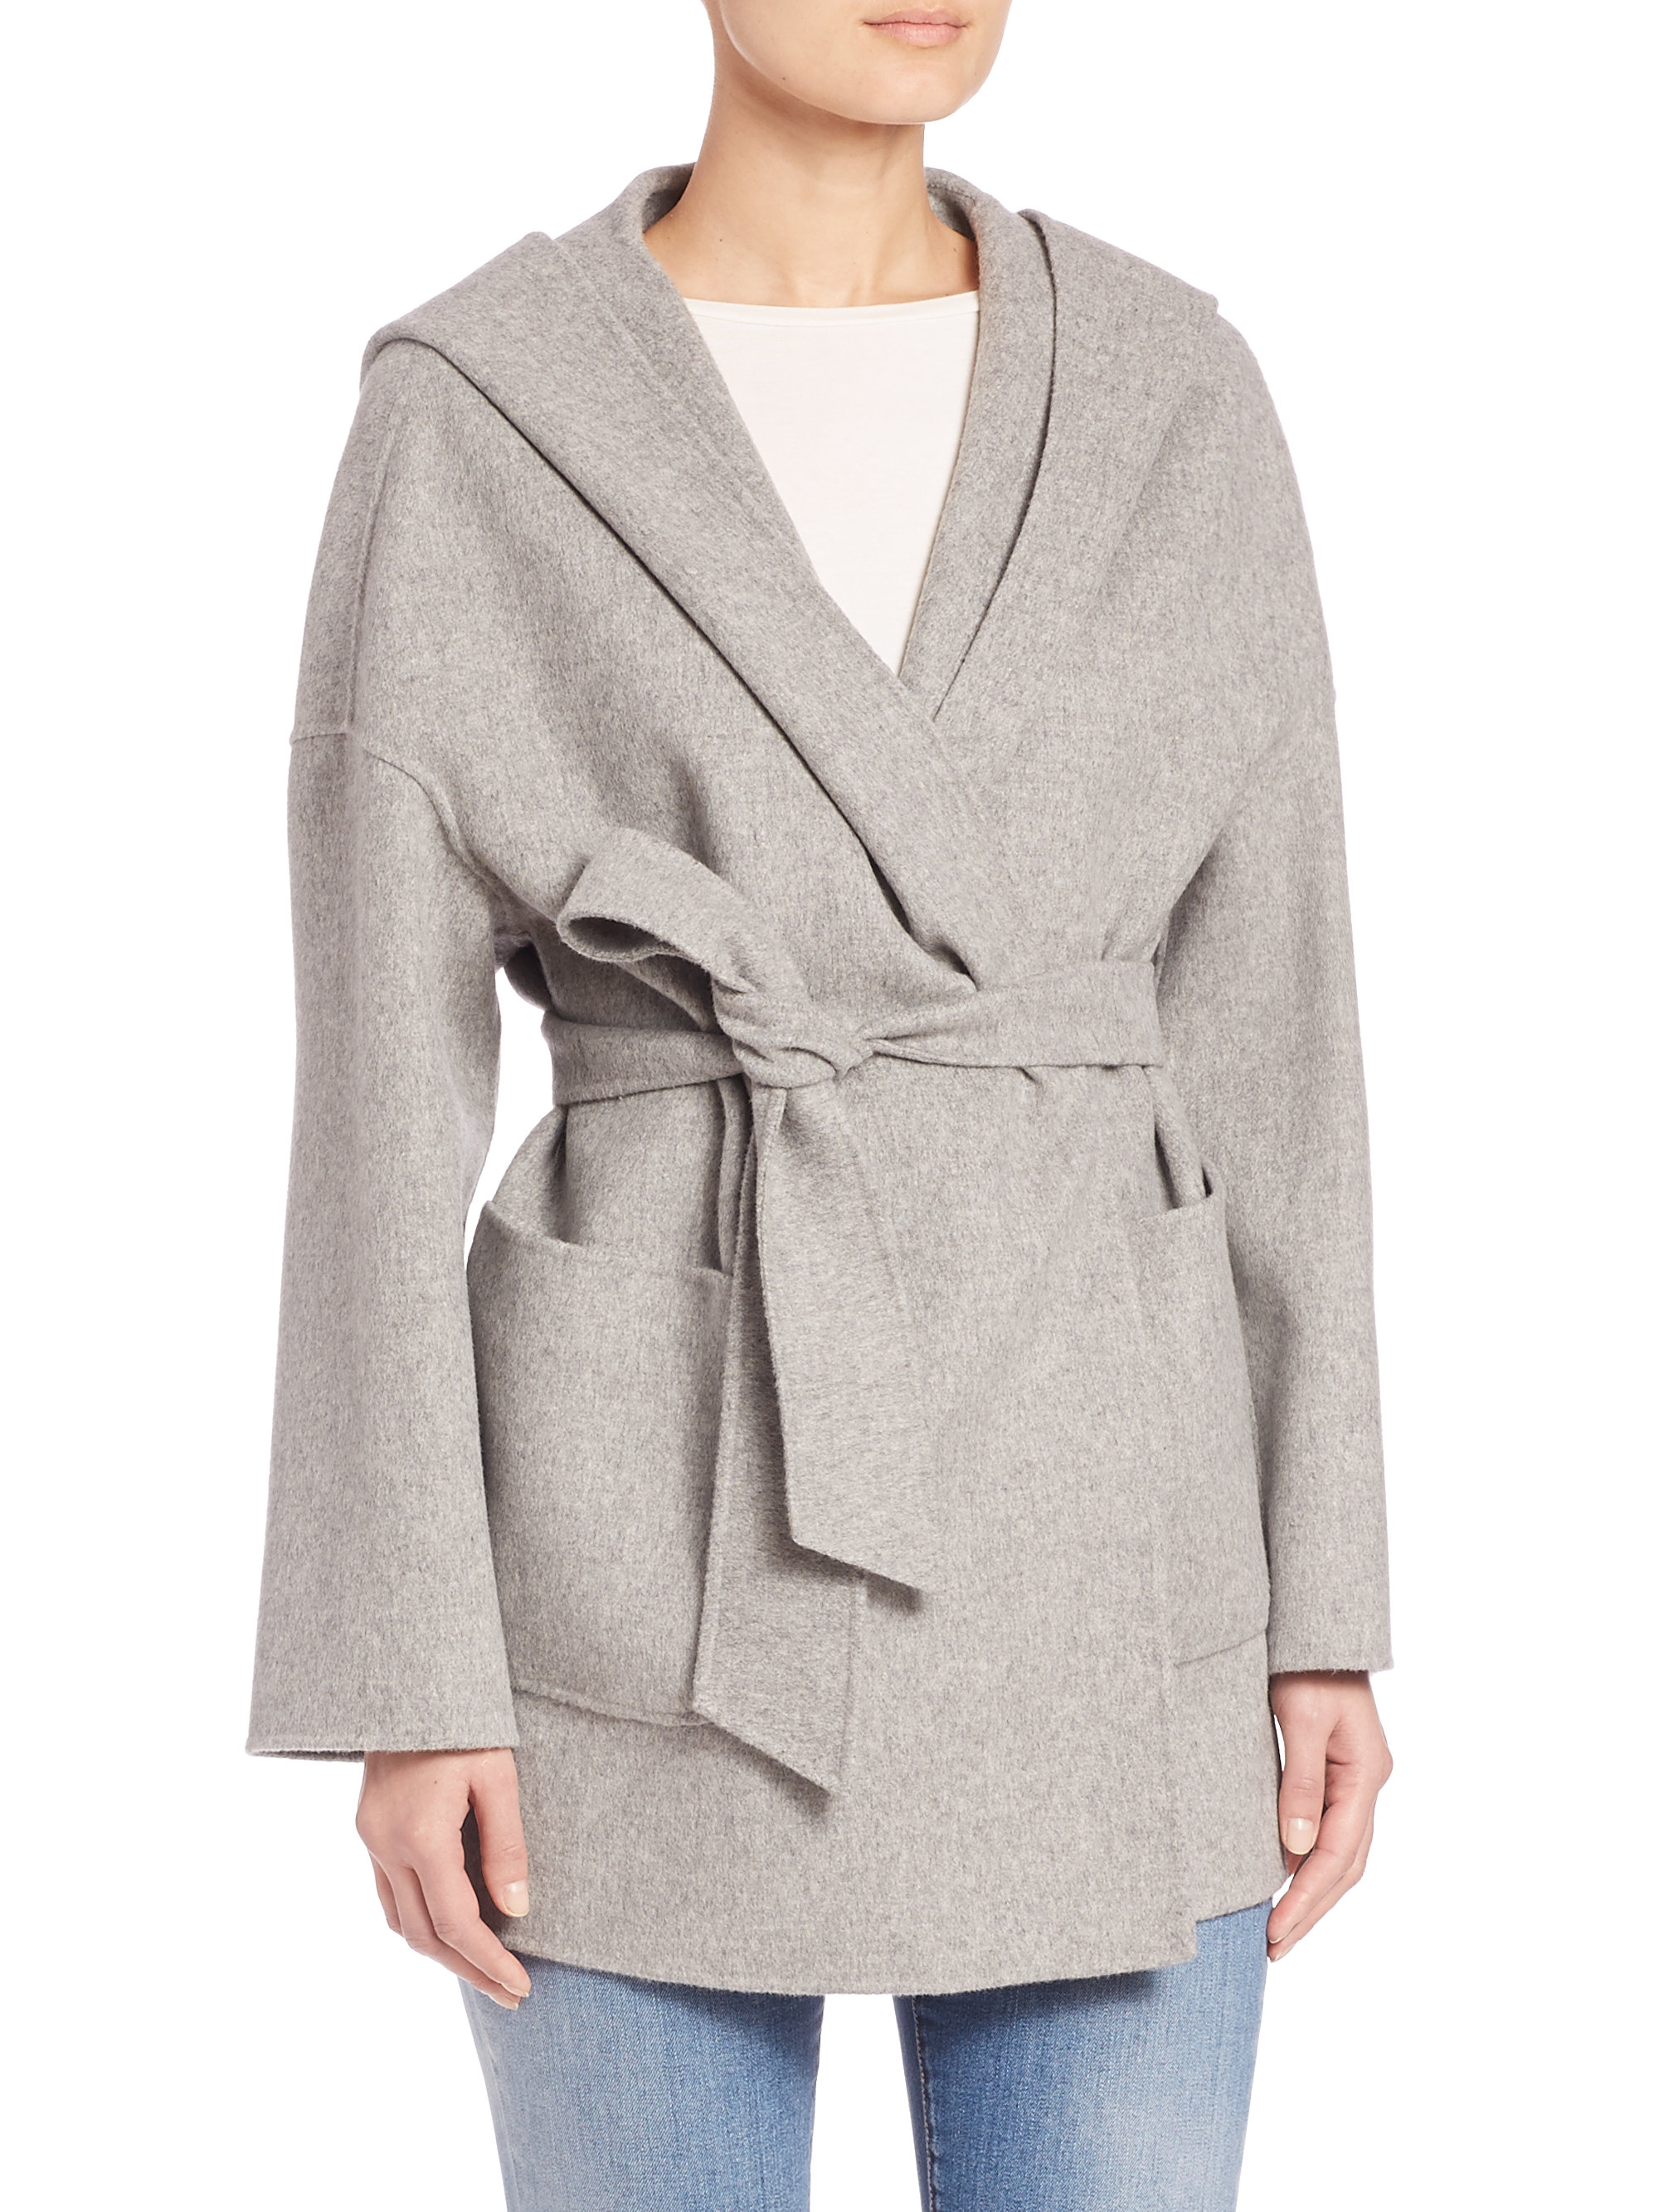 Max Mara Studio Selva Short Virgin Wool Wrap Coat in Light Grey (Gray) -  Lyst